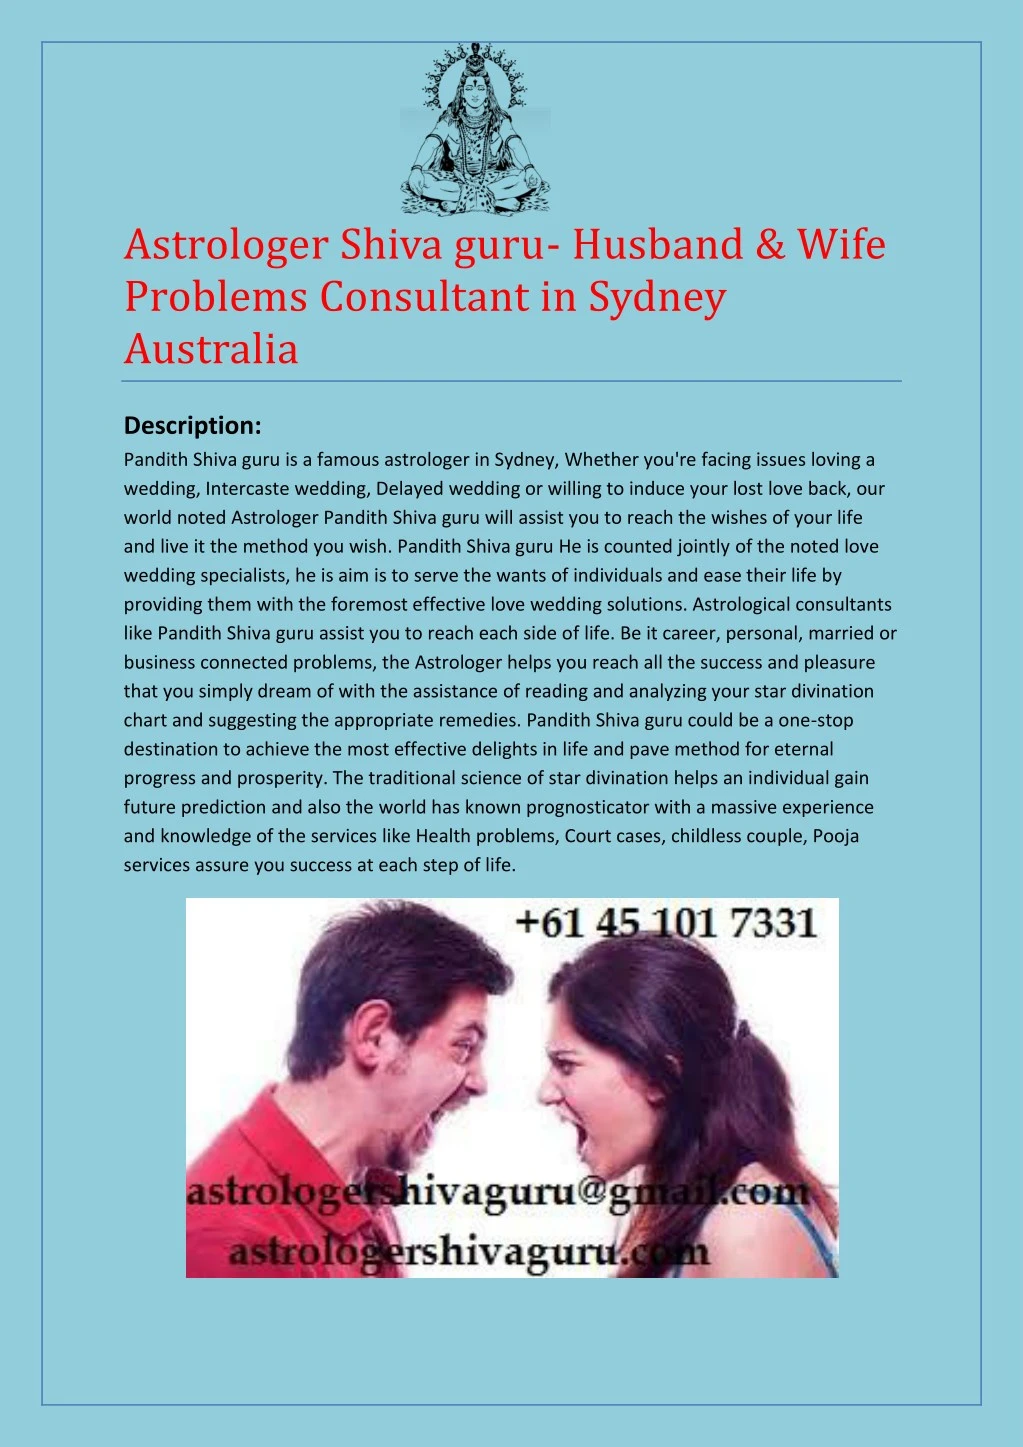 astrologer shiva guru husband wife problems